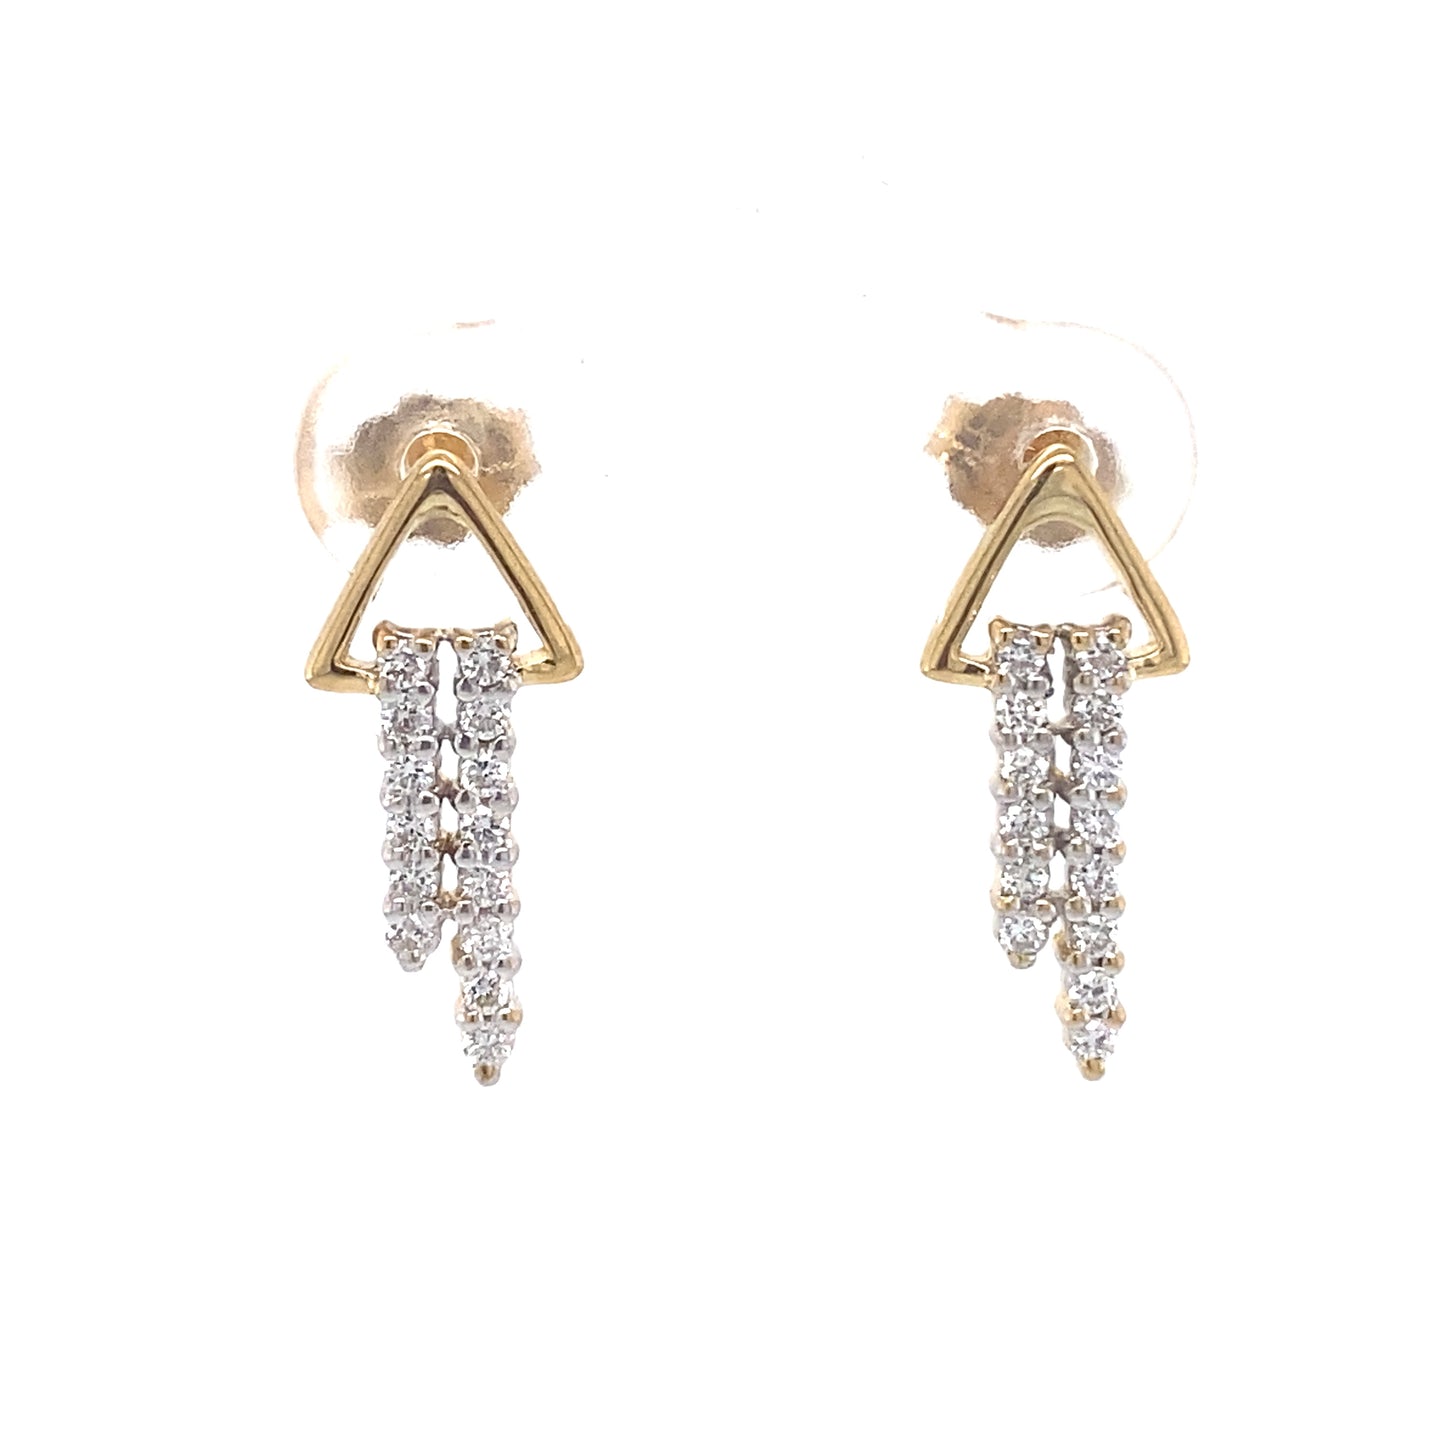 Circa 1950s Modernist Triangle Diamond Earrings in Two Tone 14K Gold